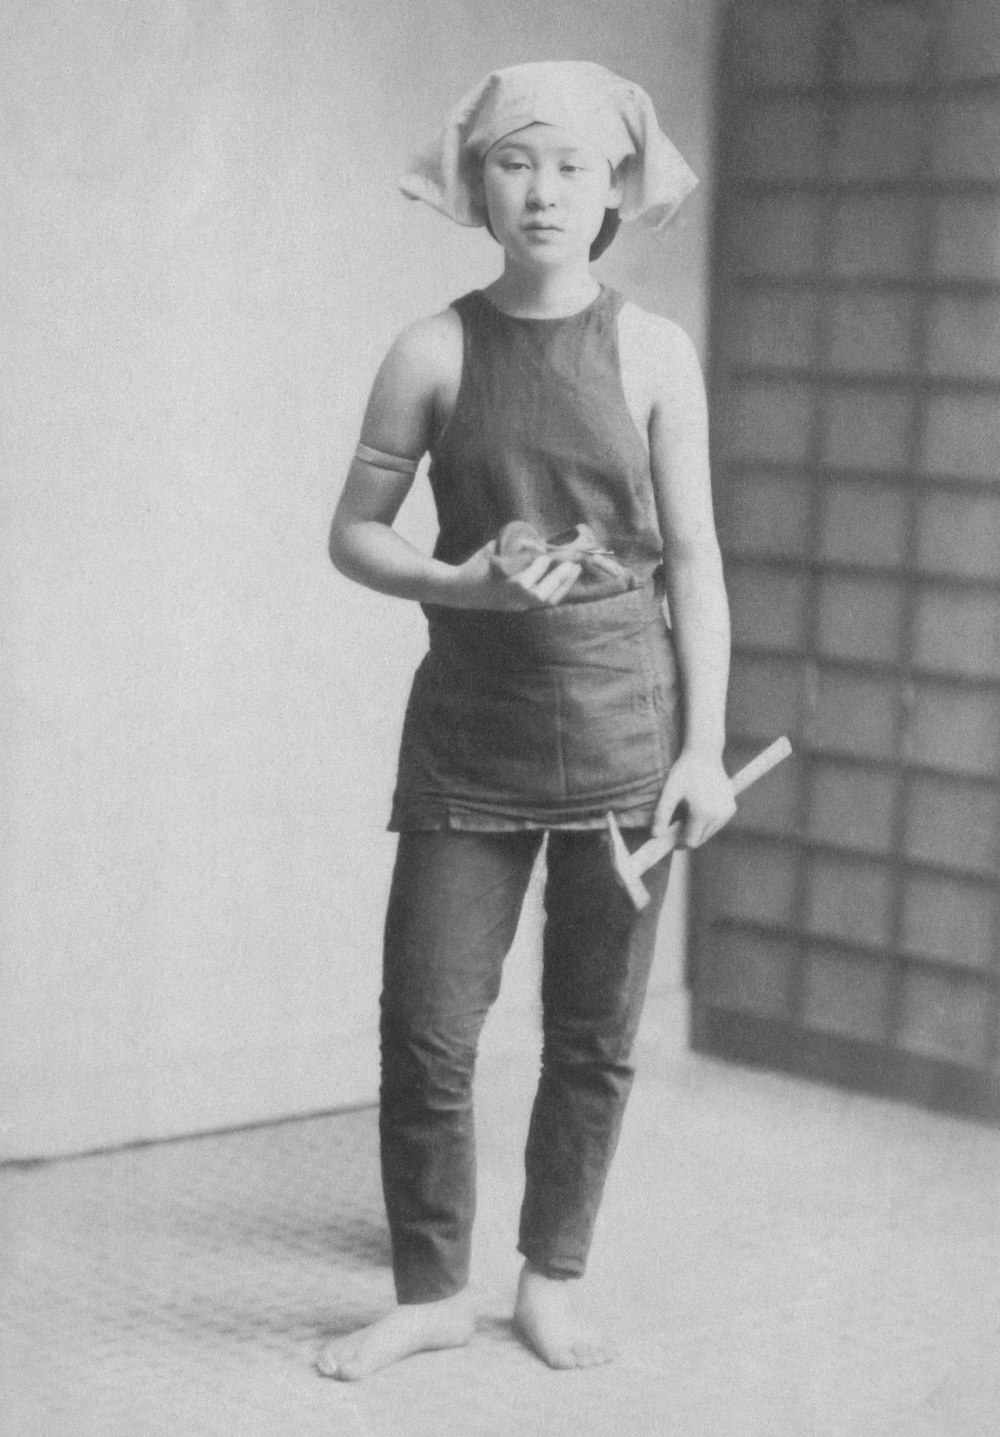 an old photo of a woman holding a baseball bat